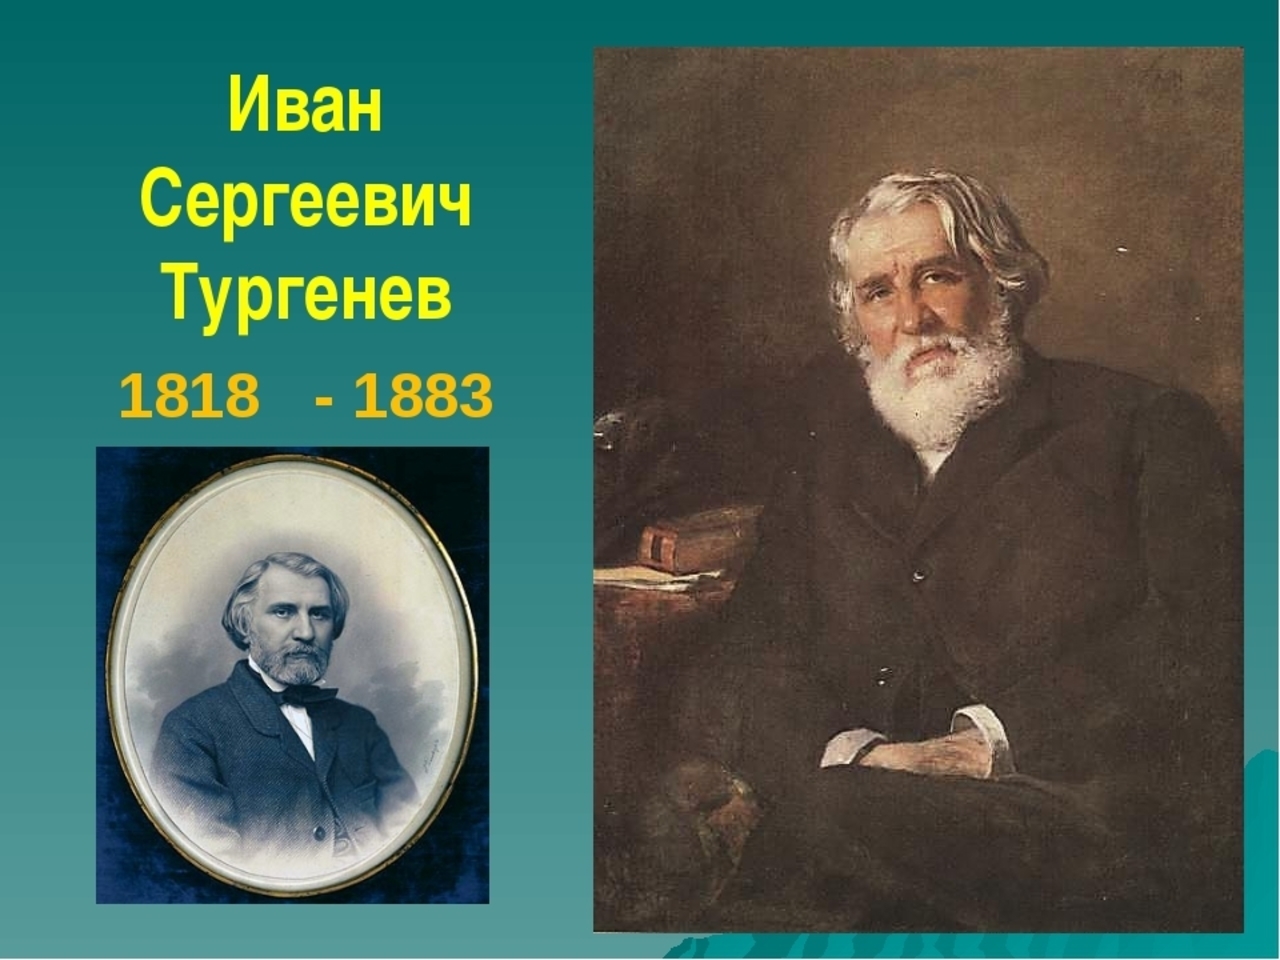 Контакт тургенев. 1818 1883 Тургенев. Тургенев портрет с годами жизни.